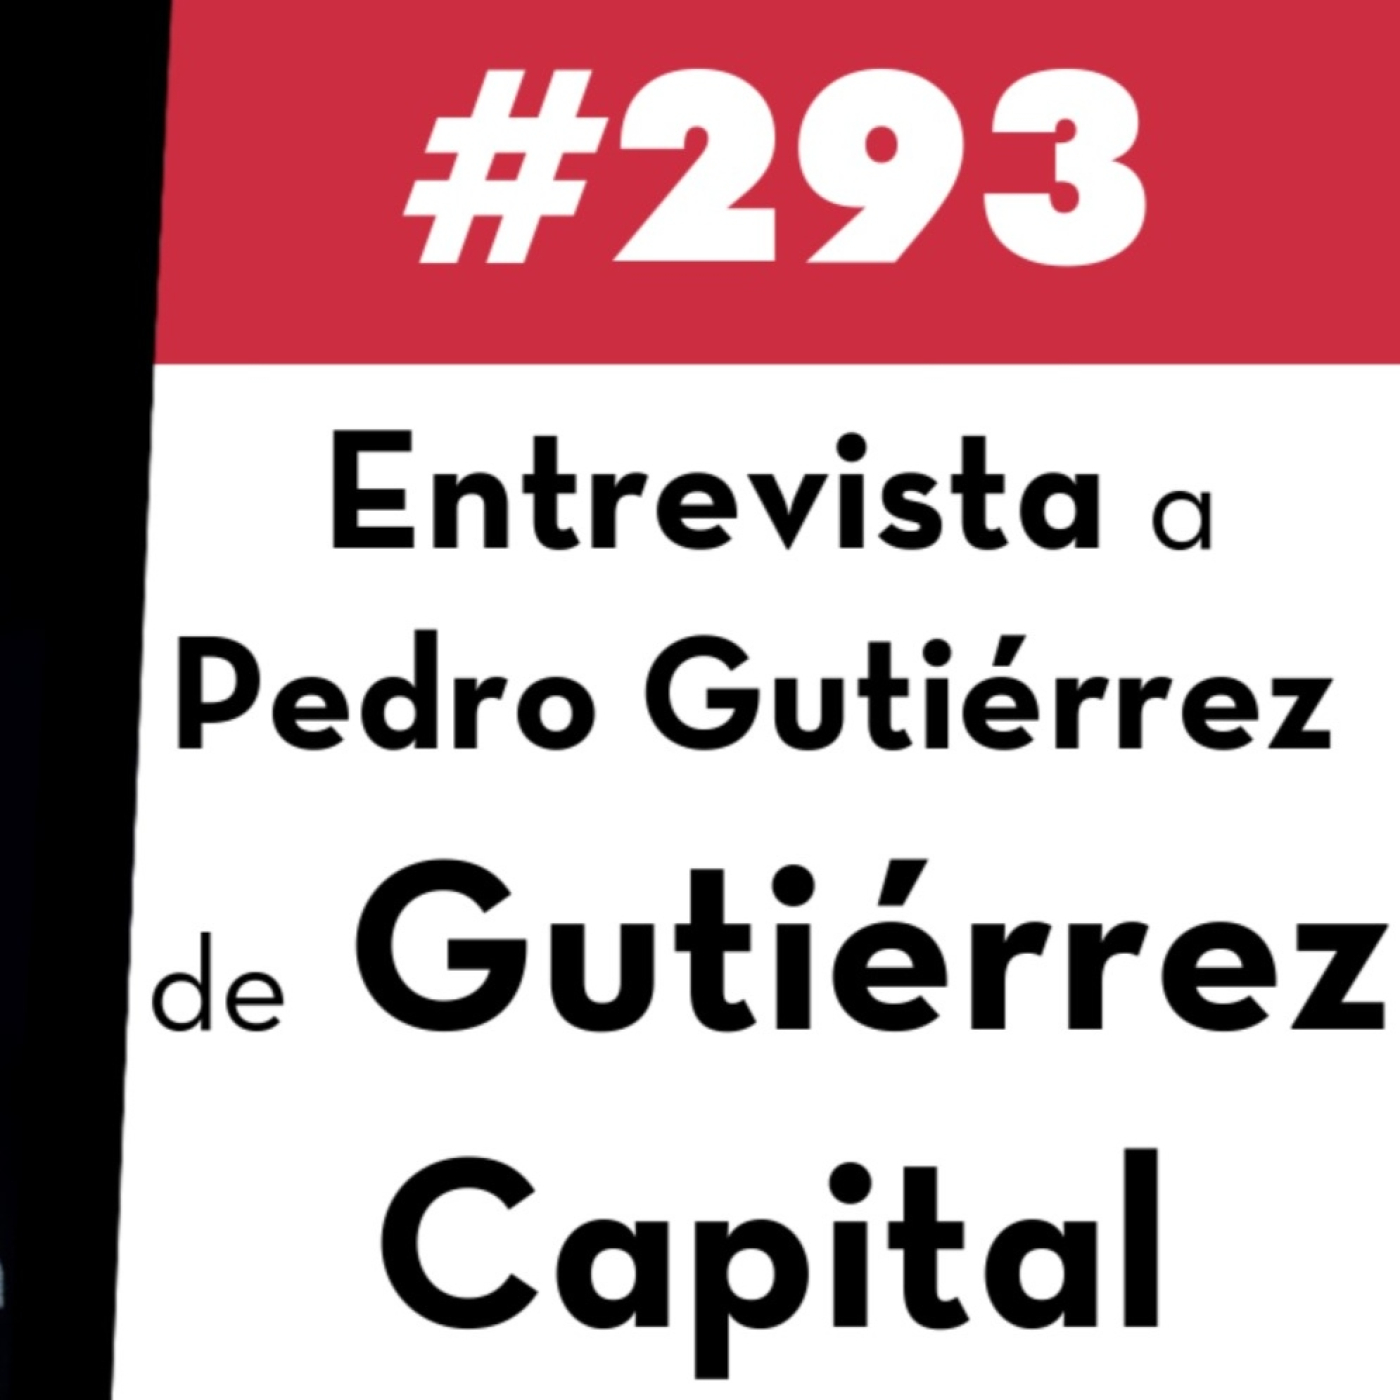 293. Entrevista a Pedro Gutiérrez de Gutiérrez Capital